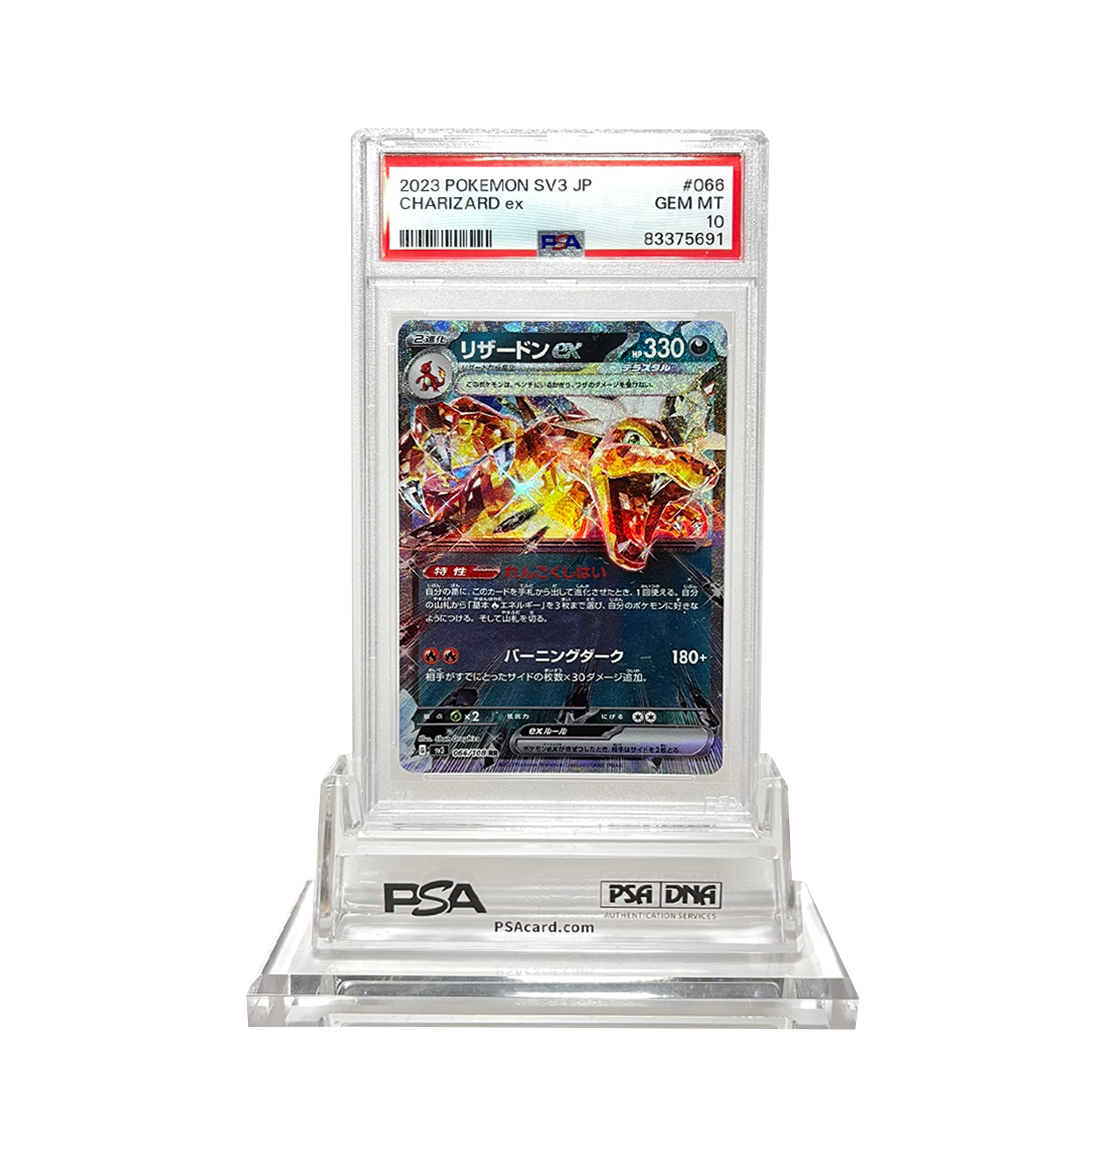 PSA 10 Charizard ex 066 Ruler of the black flame SV3 Japanese Pokemon card